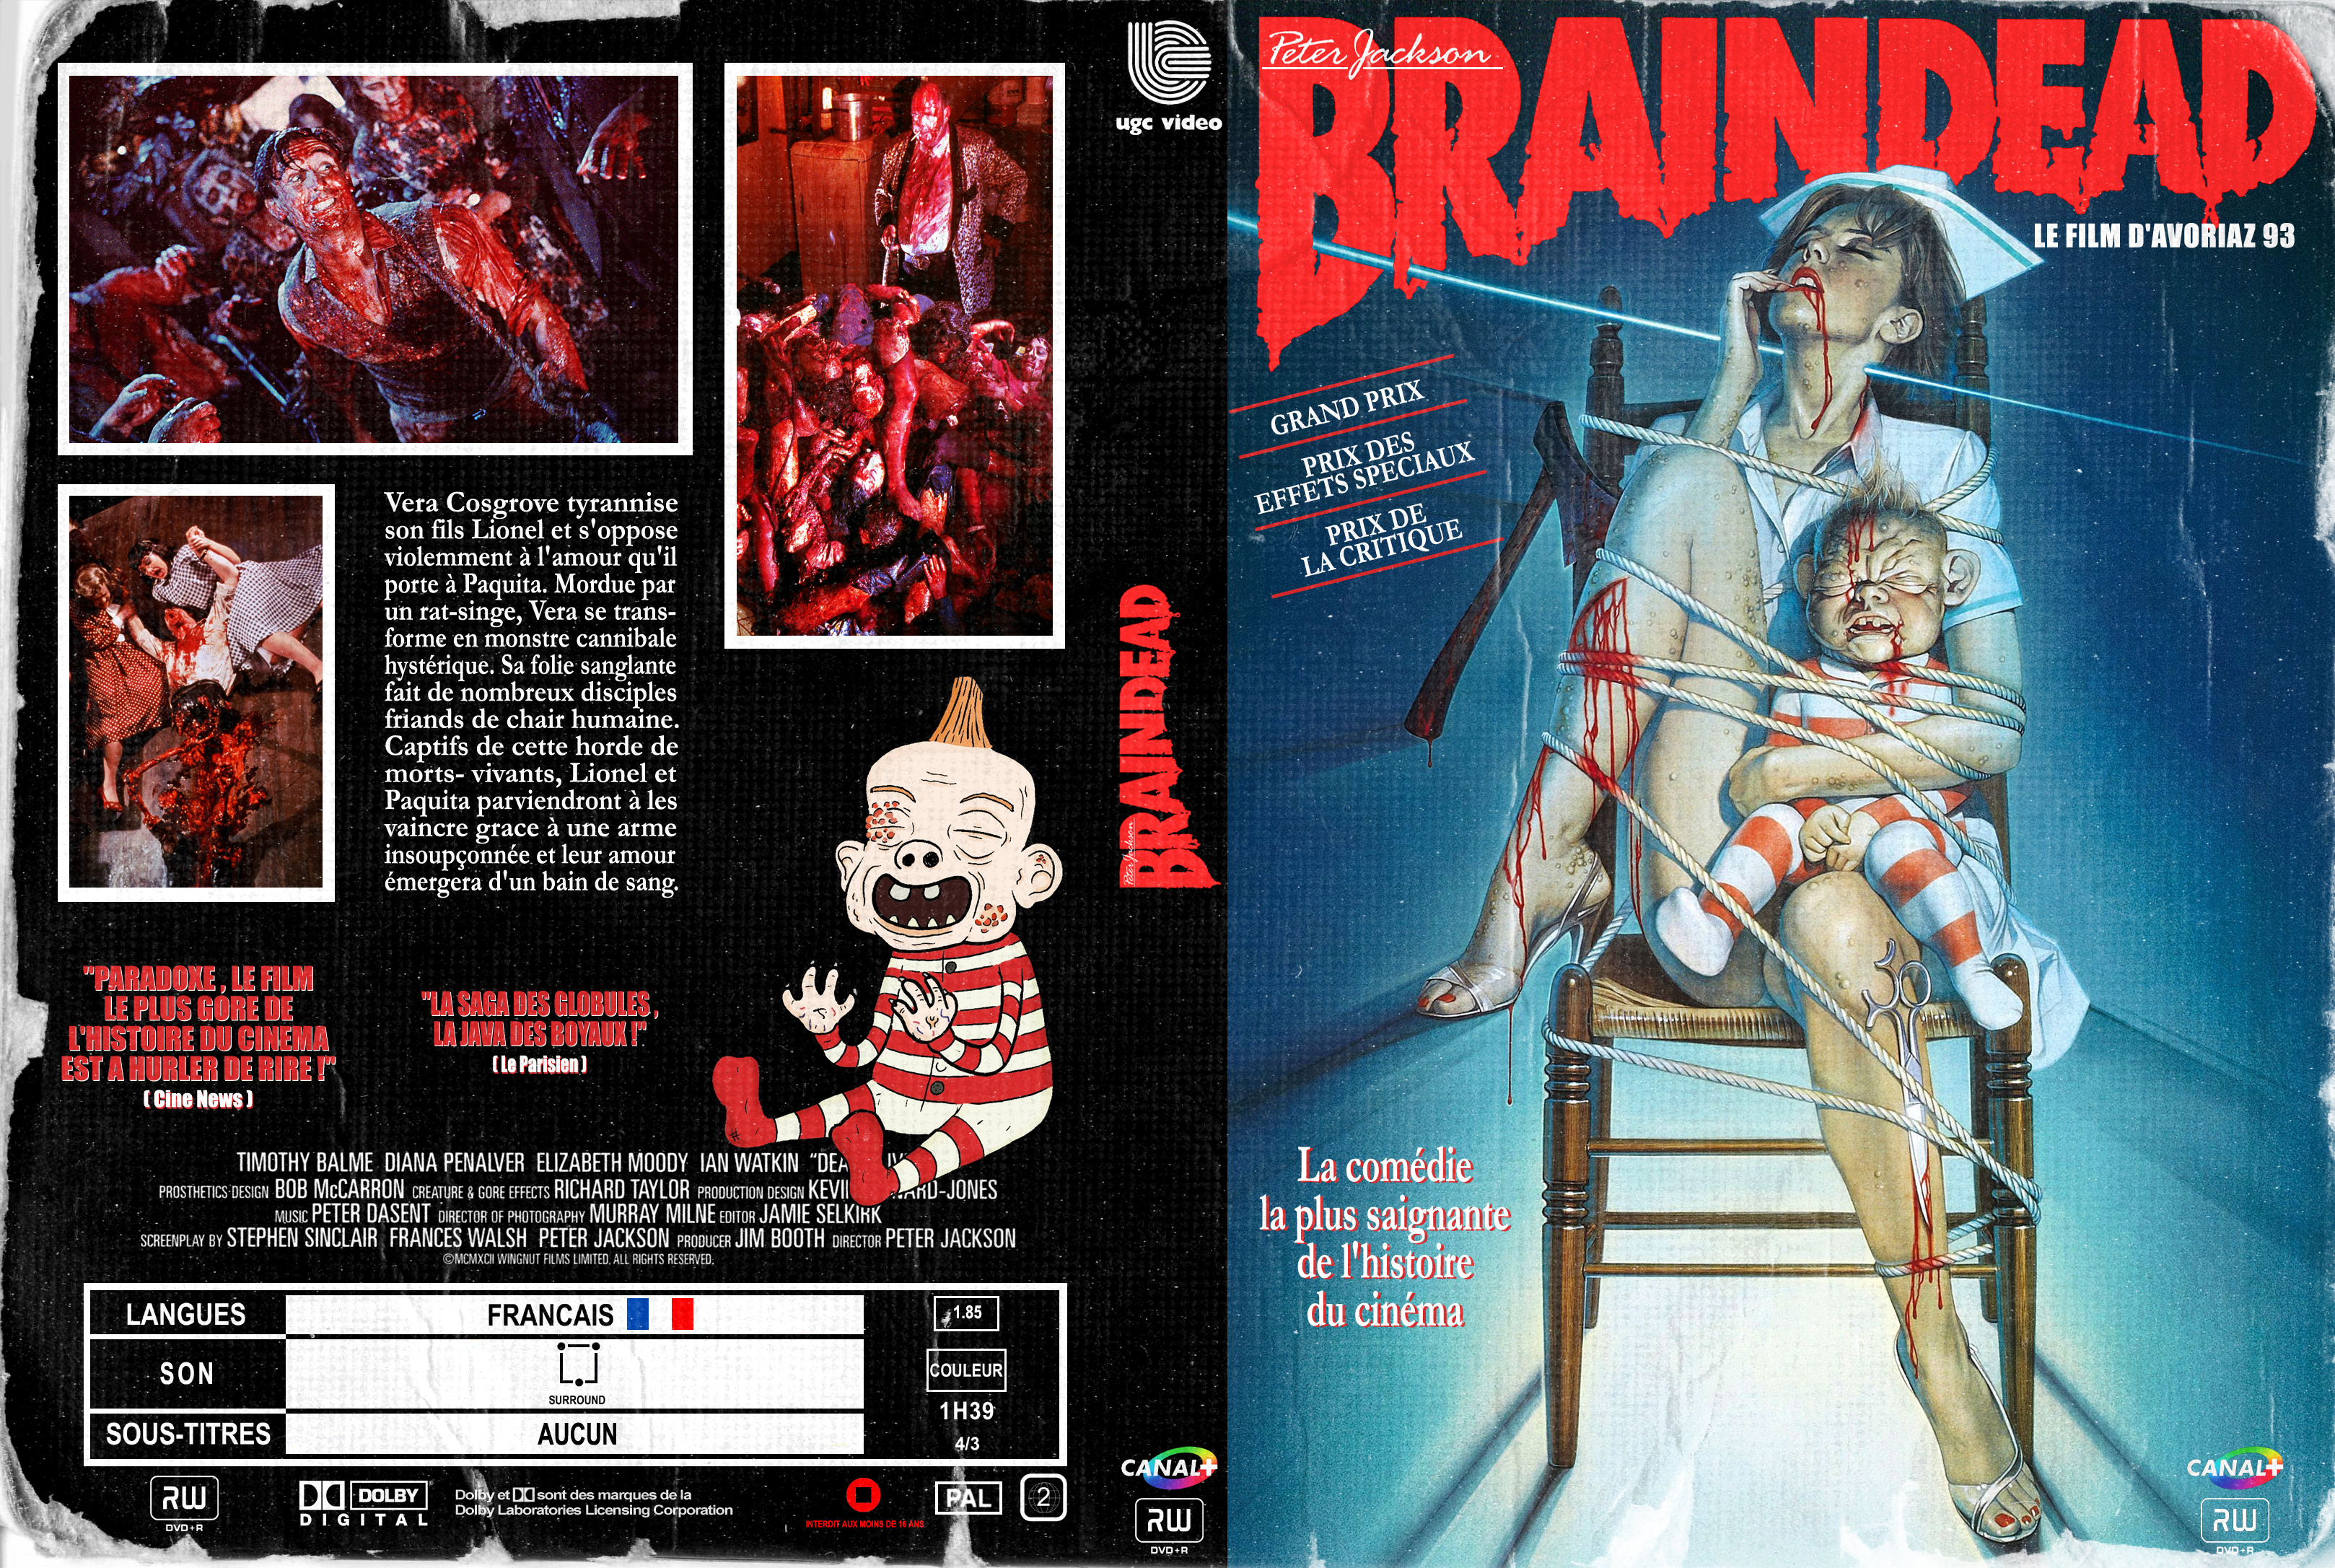 Jaquette DVD Braindead custom